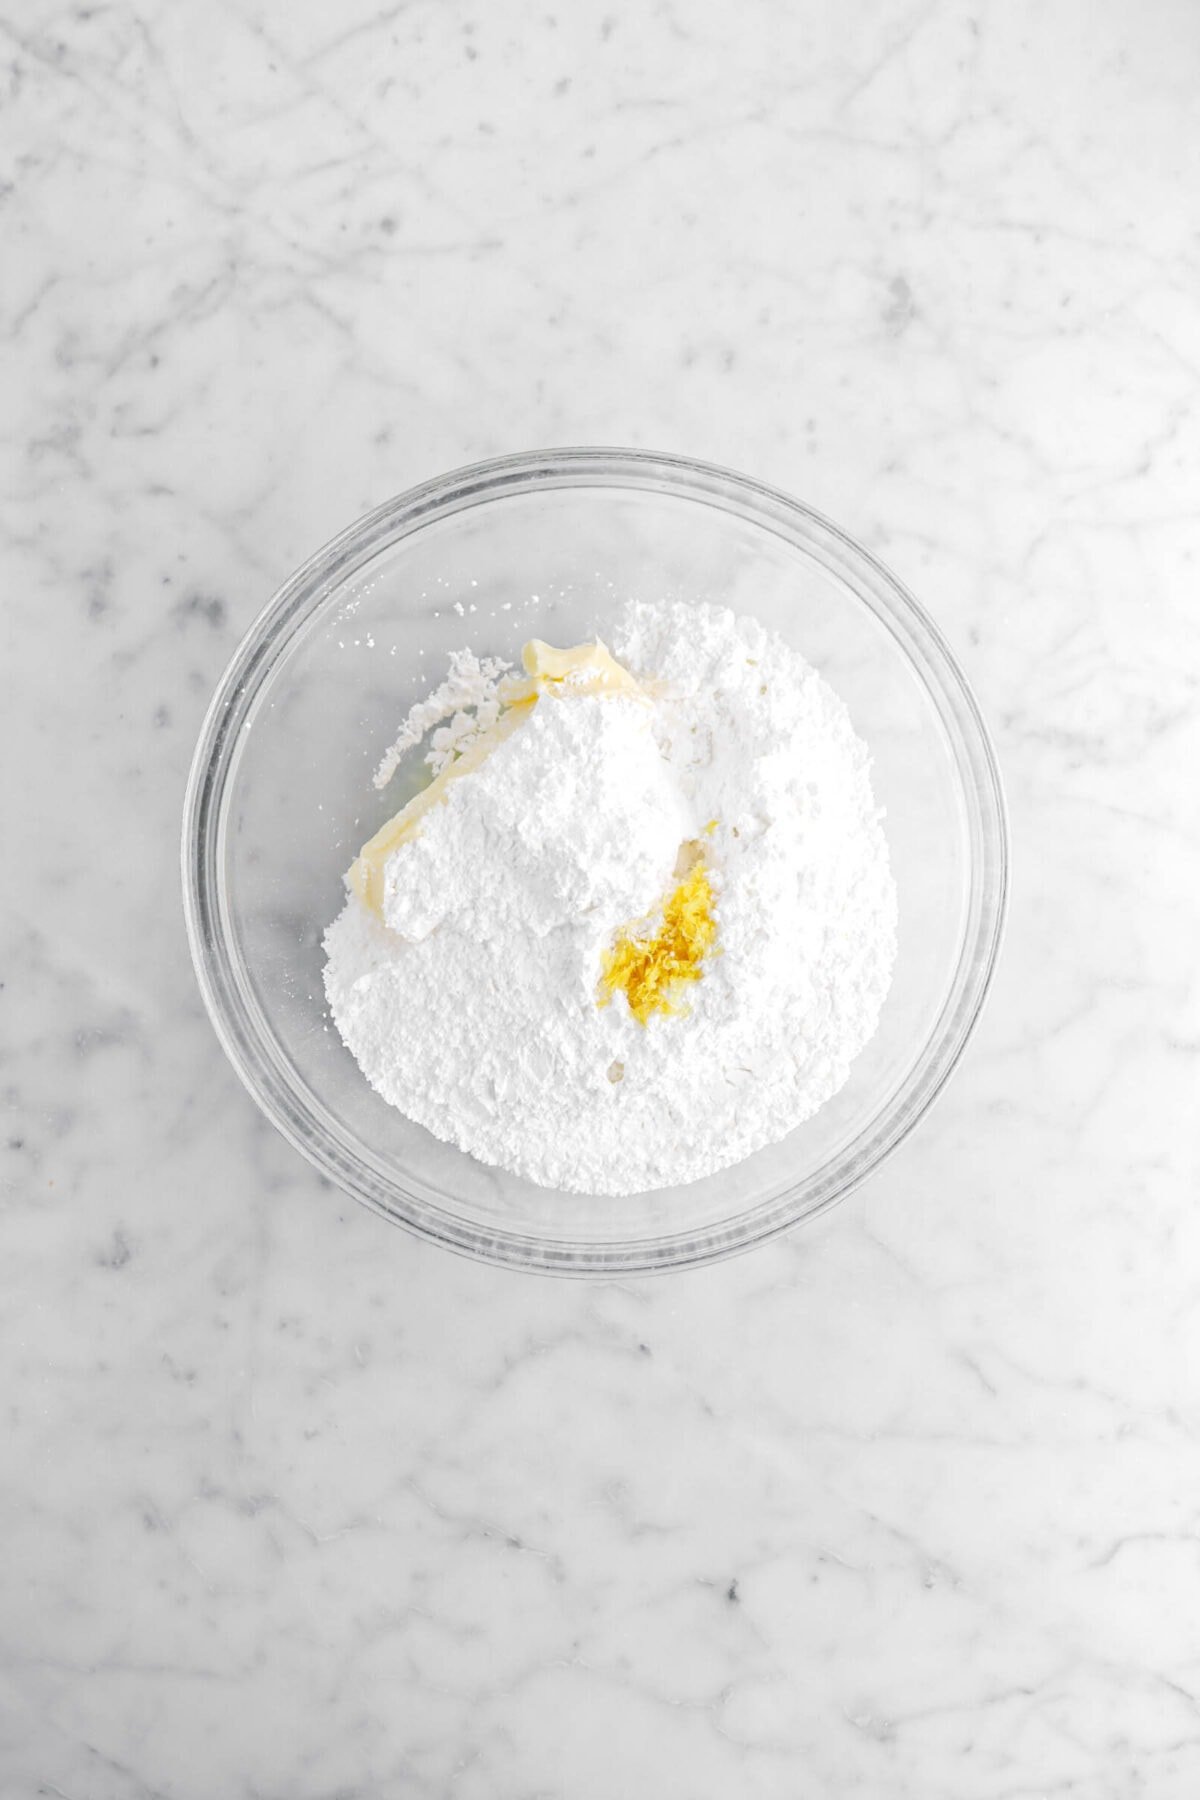 butter, powdered sugar, lemon juice, and lemon zest in glass bowl.